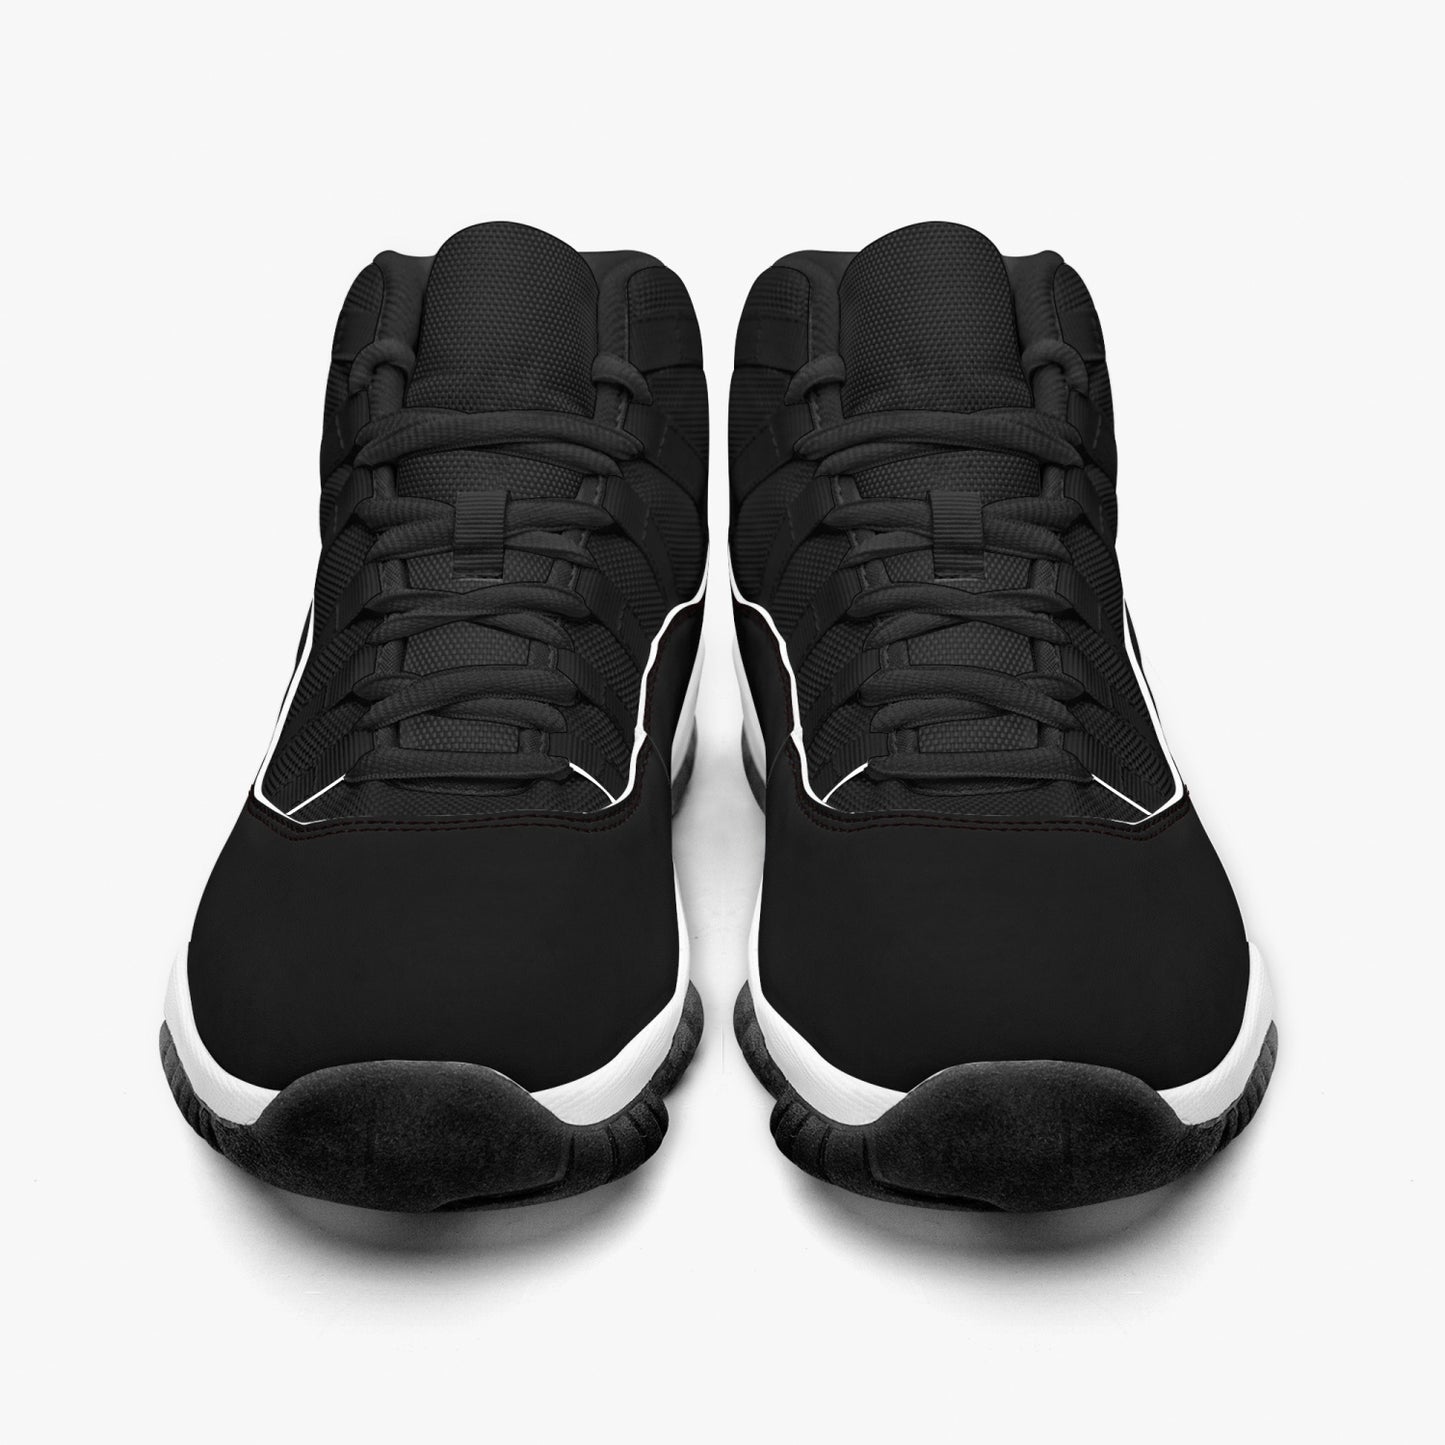 AJ11 Style Basketball Sneakers